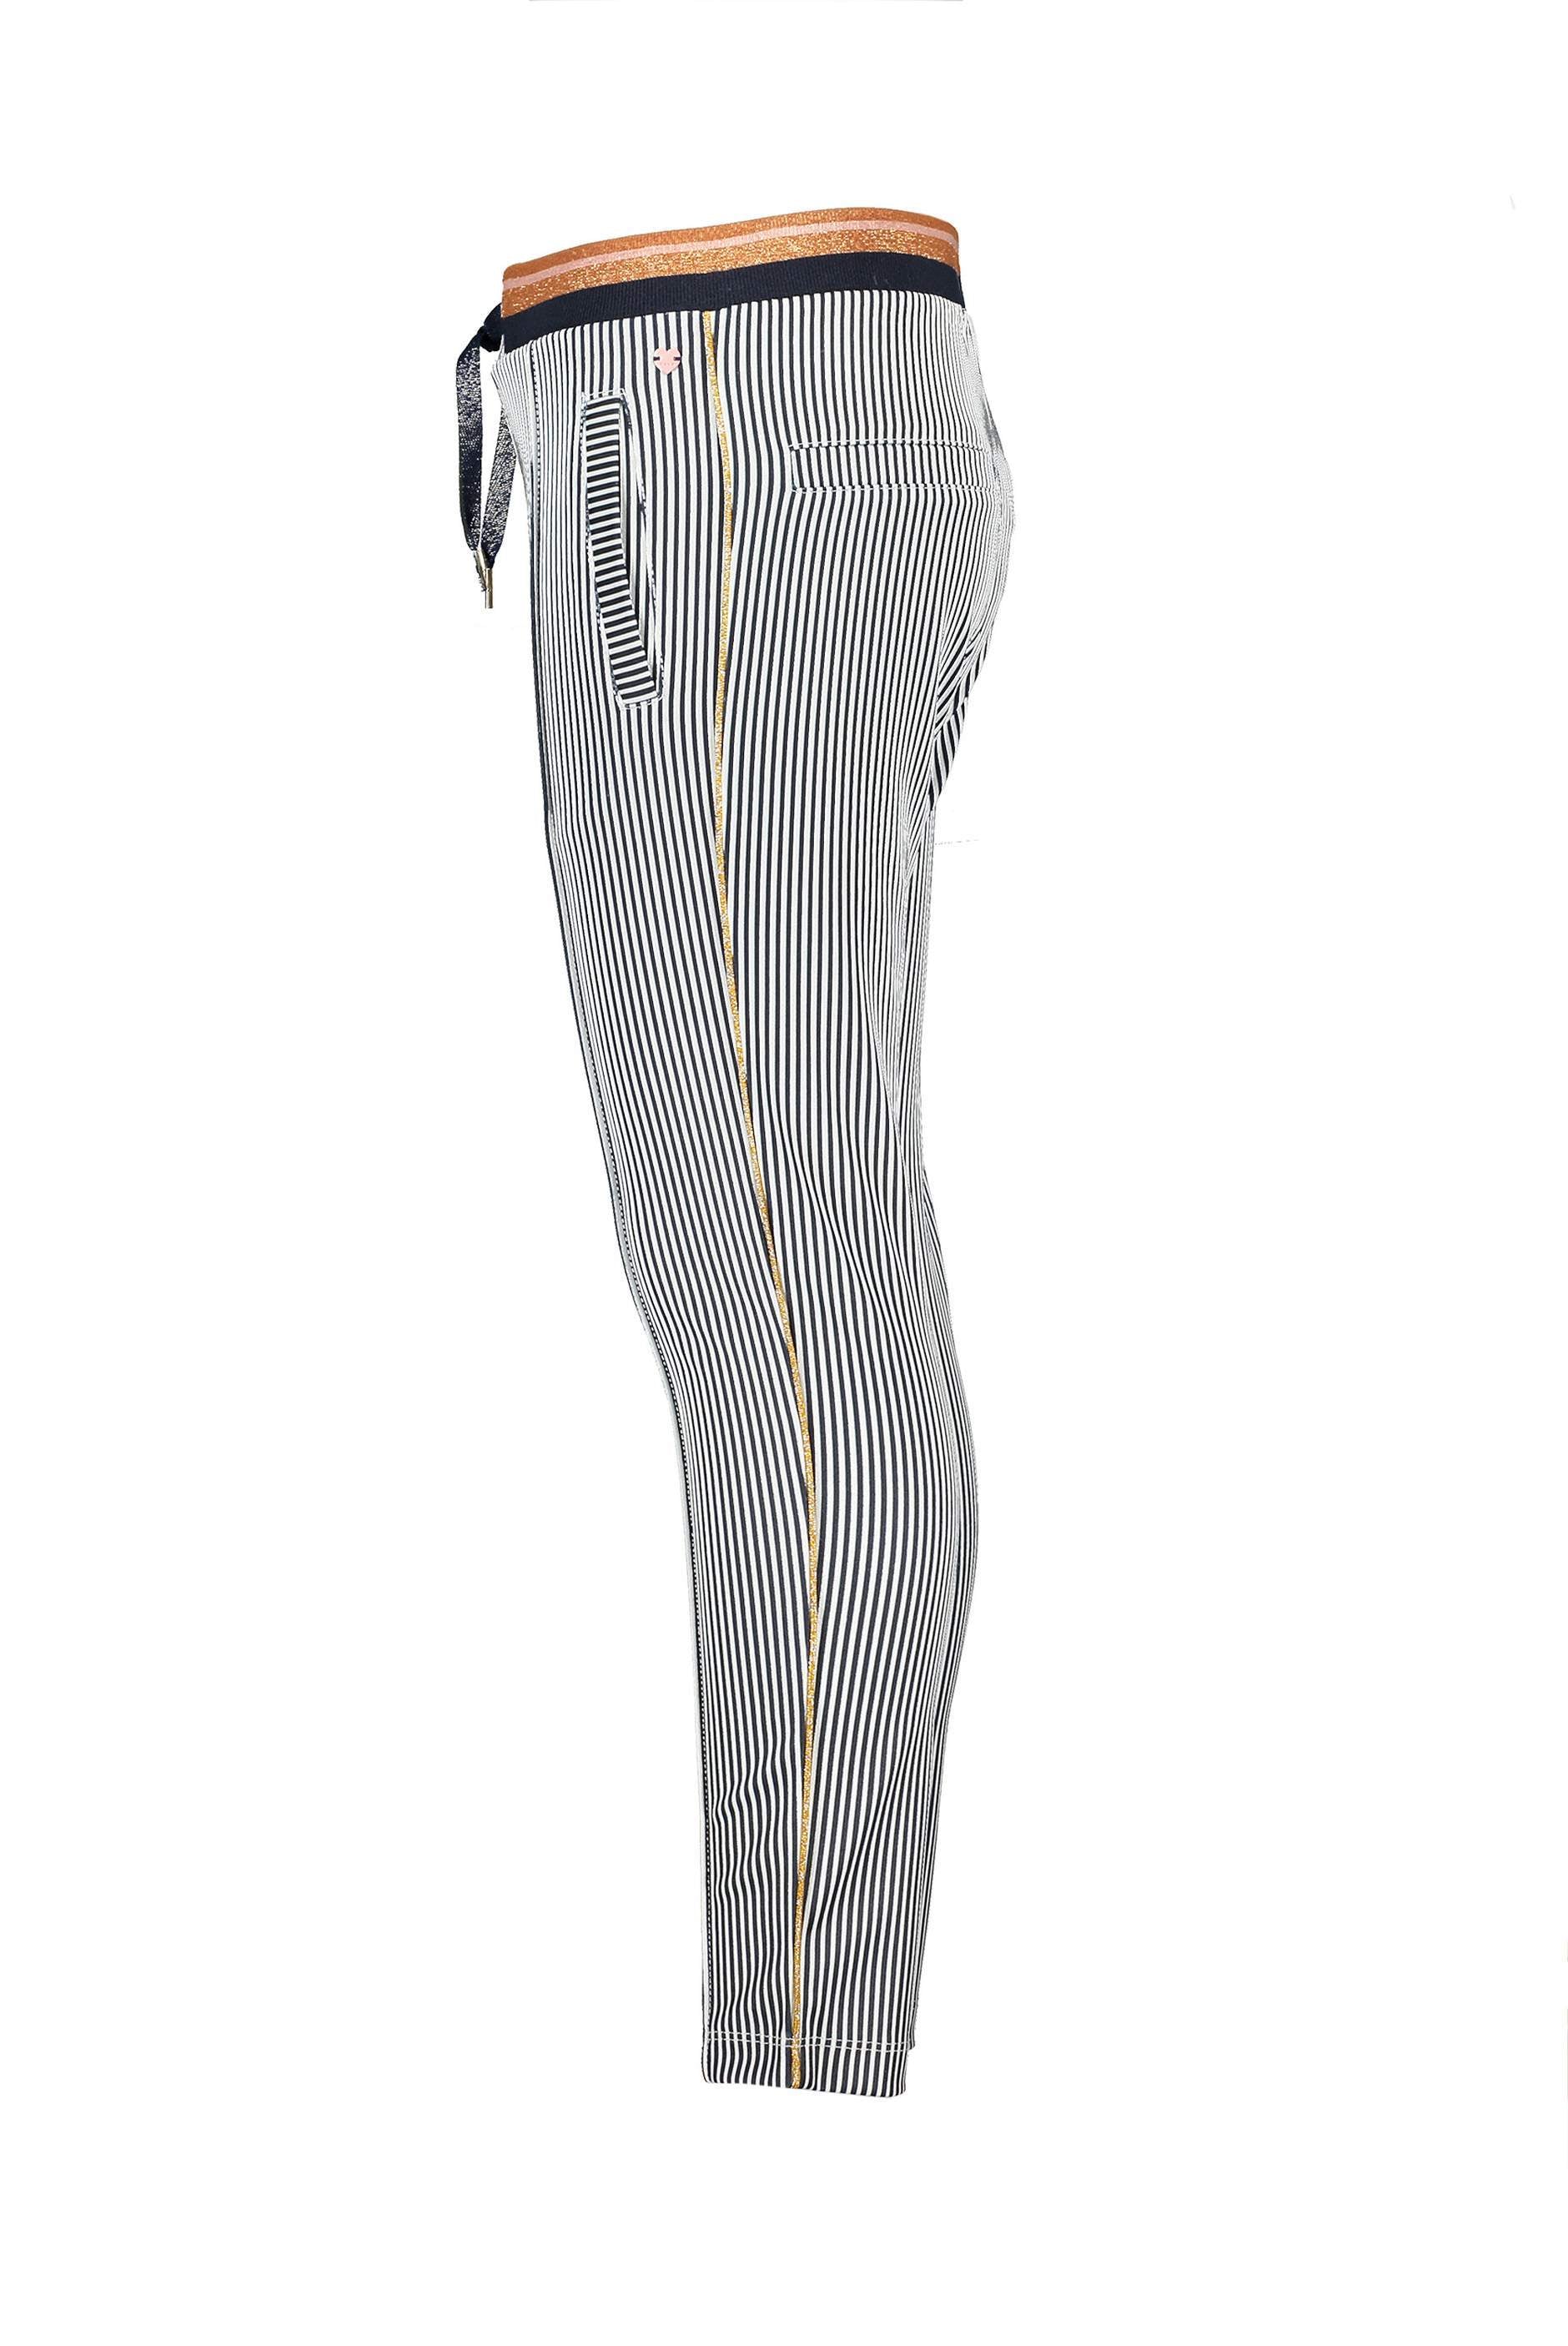 Meisjes Secler pants AOP Stripe on punta di roma van NoNo in de kleur Navy Blazer in maat 146/152.